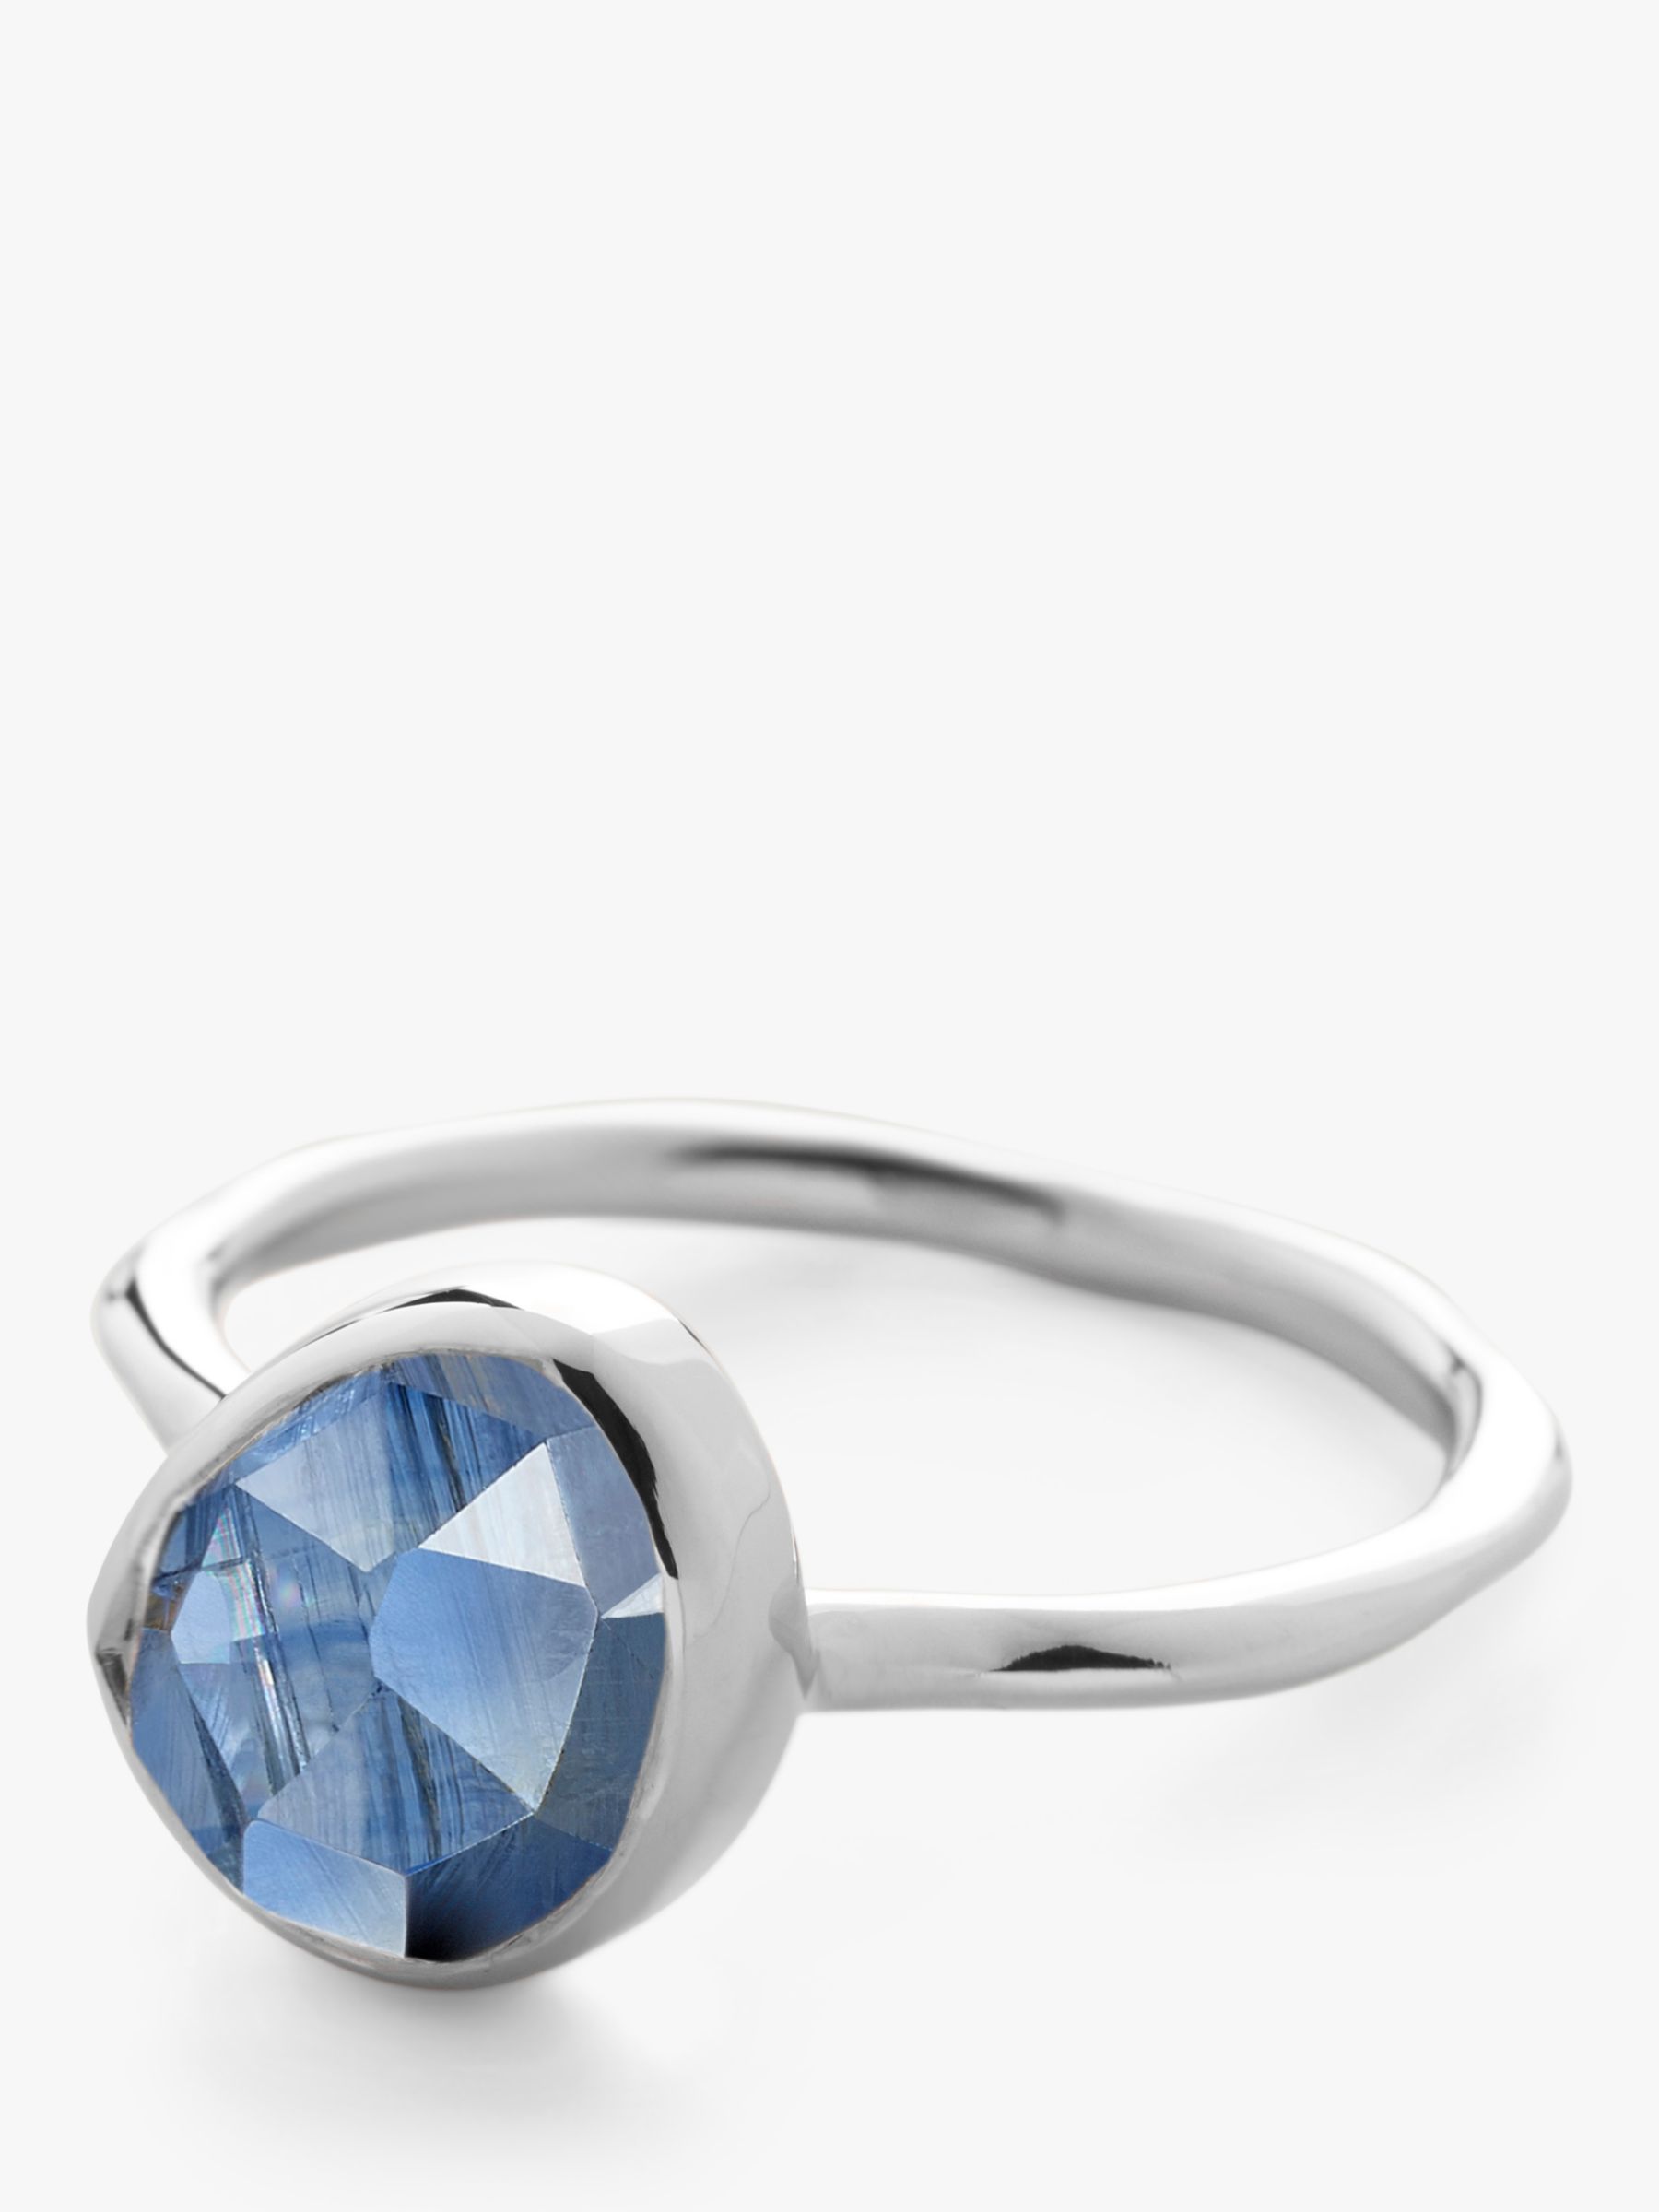 Monica Vinader Siren Kyanite Stacking Ring, Silver/Blue, S